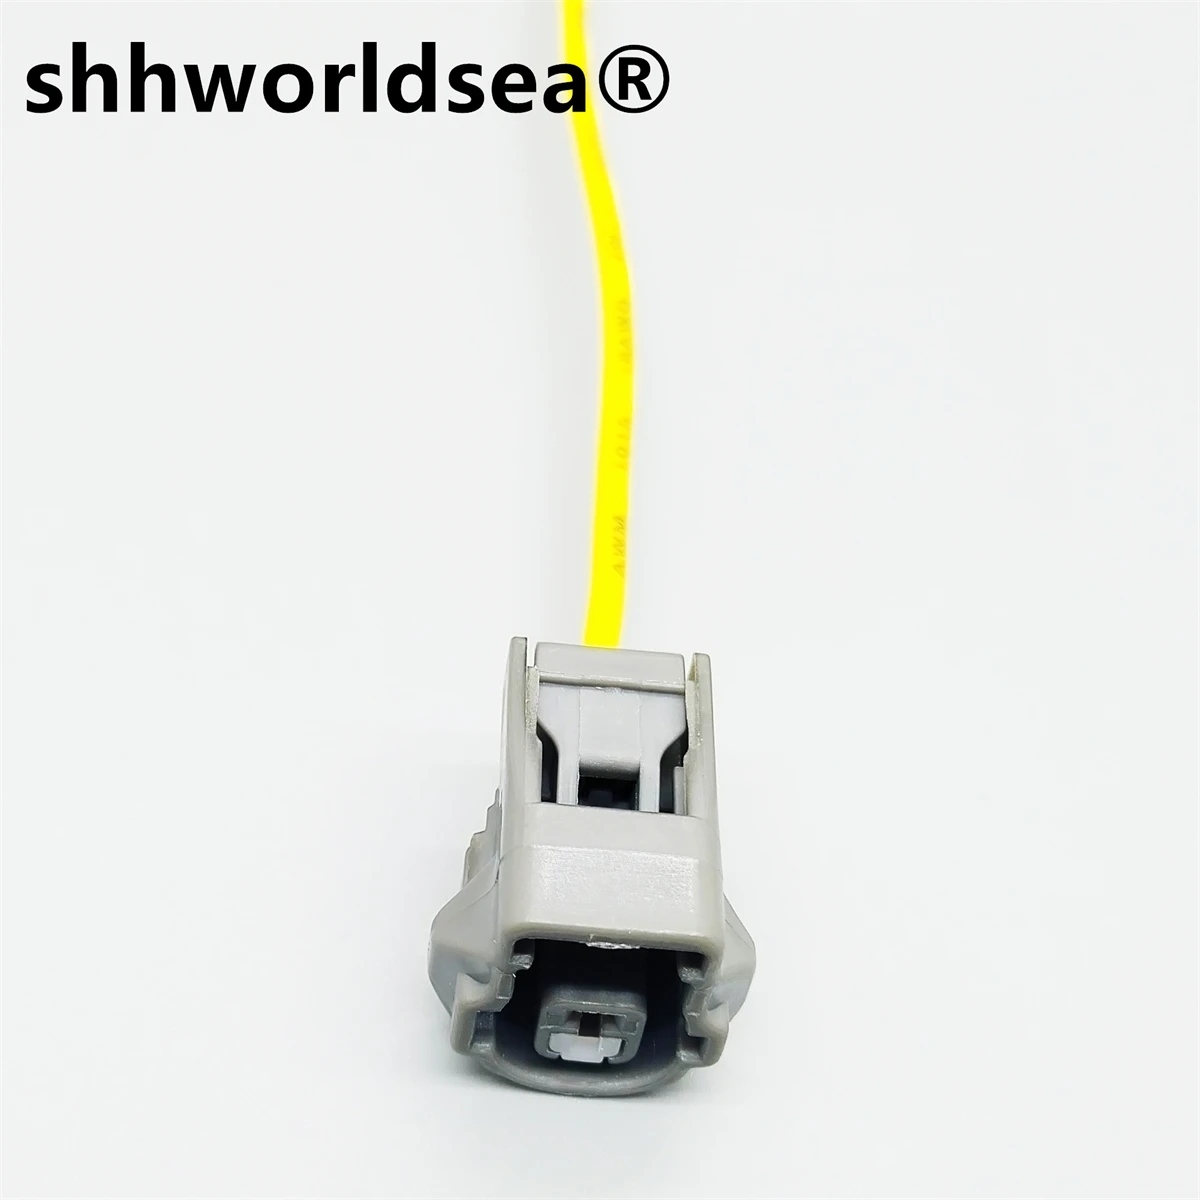 

shhworldsea 1 Pin 2.2mm Automotive Connector 2JZ Knock Sensor Car Plugs Auto Wire Plug For Toyota 90980-11166 7283-1015-10